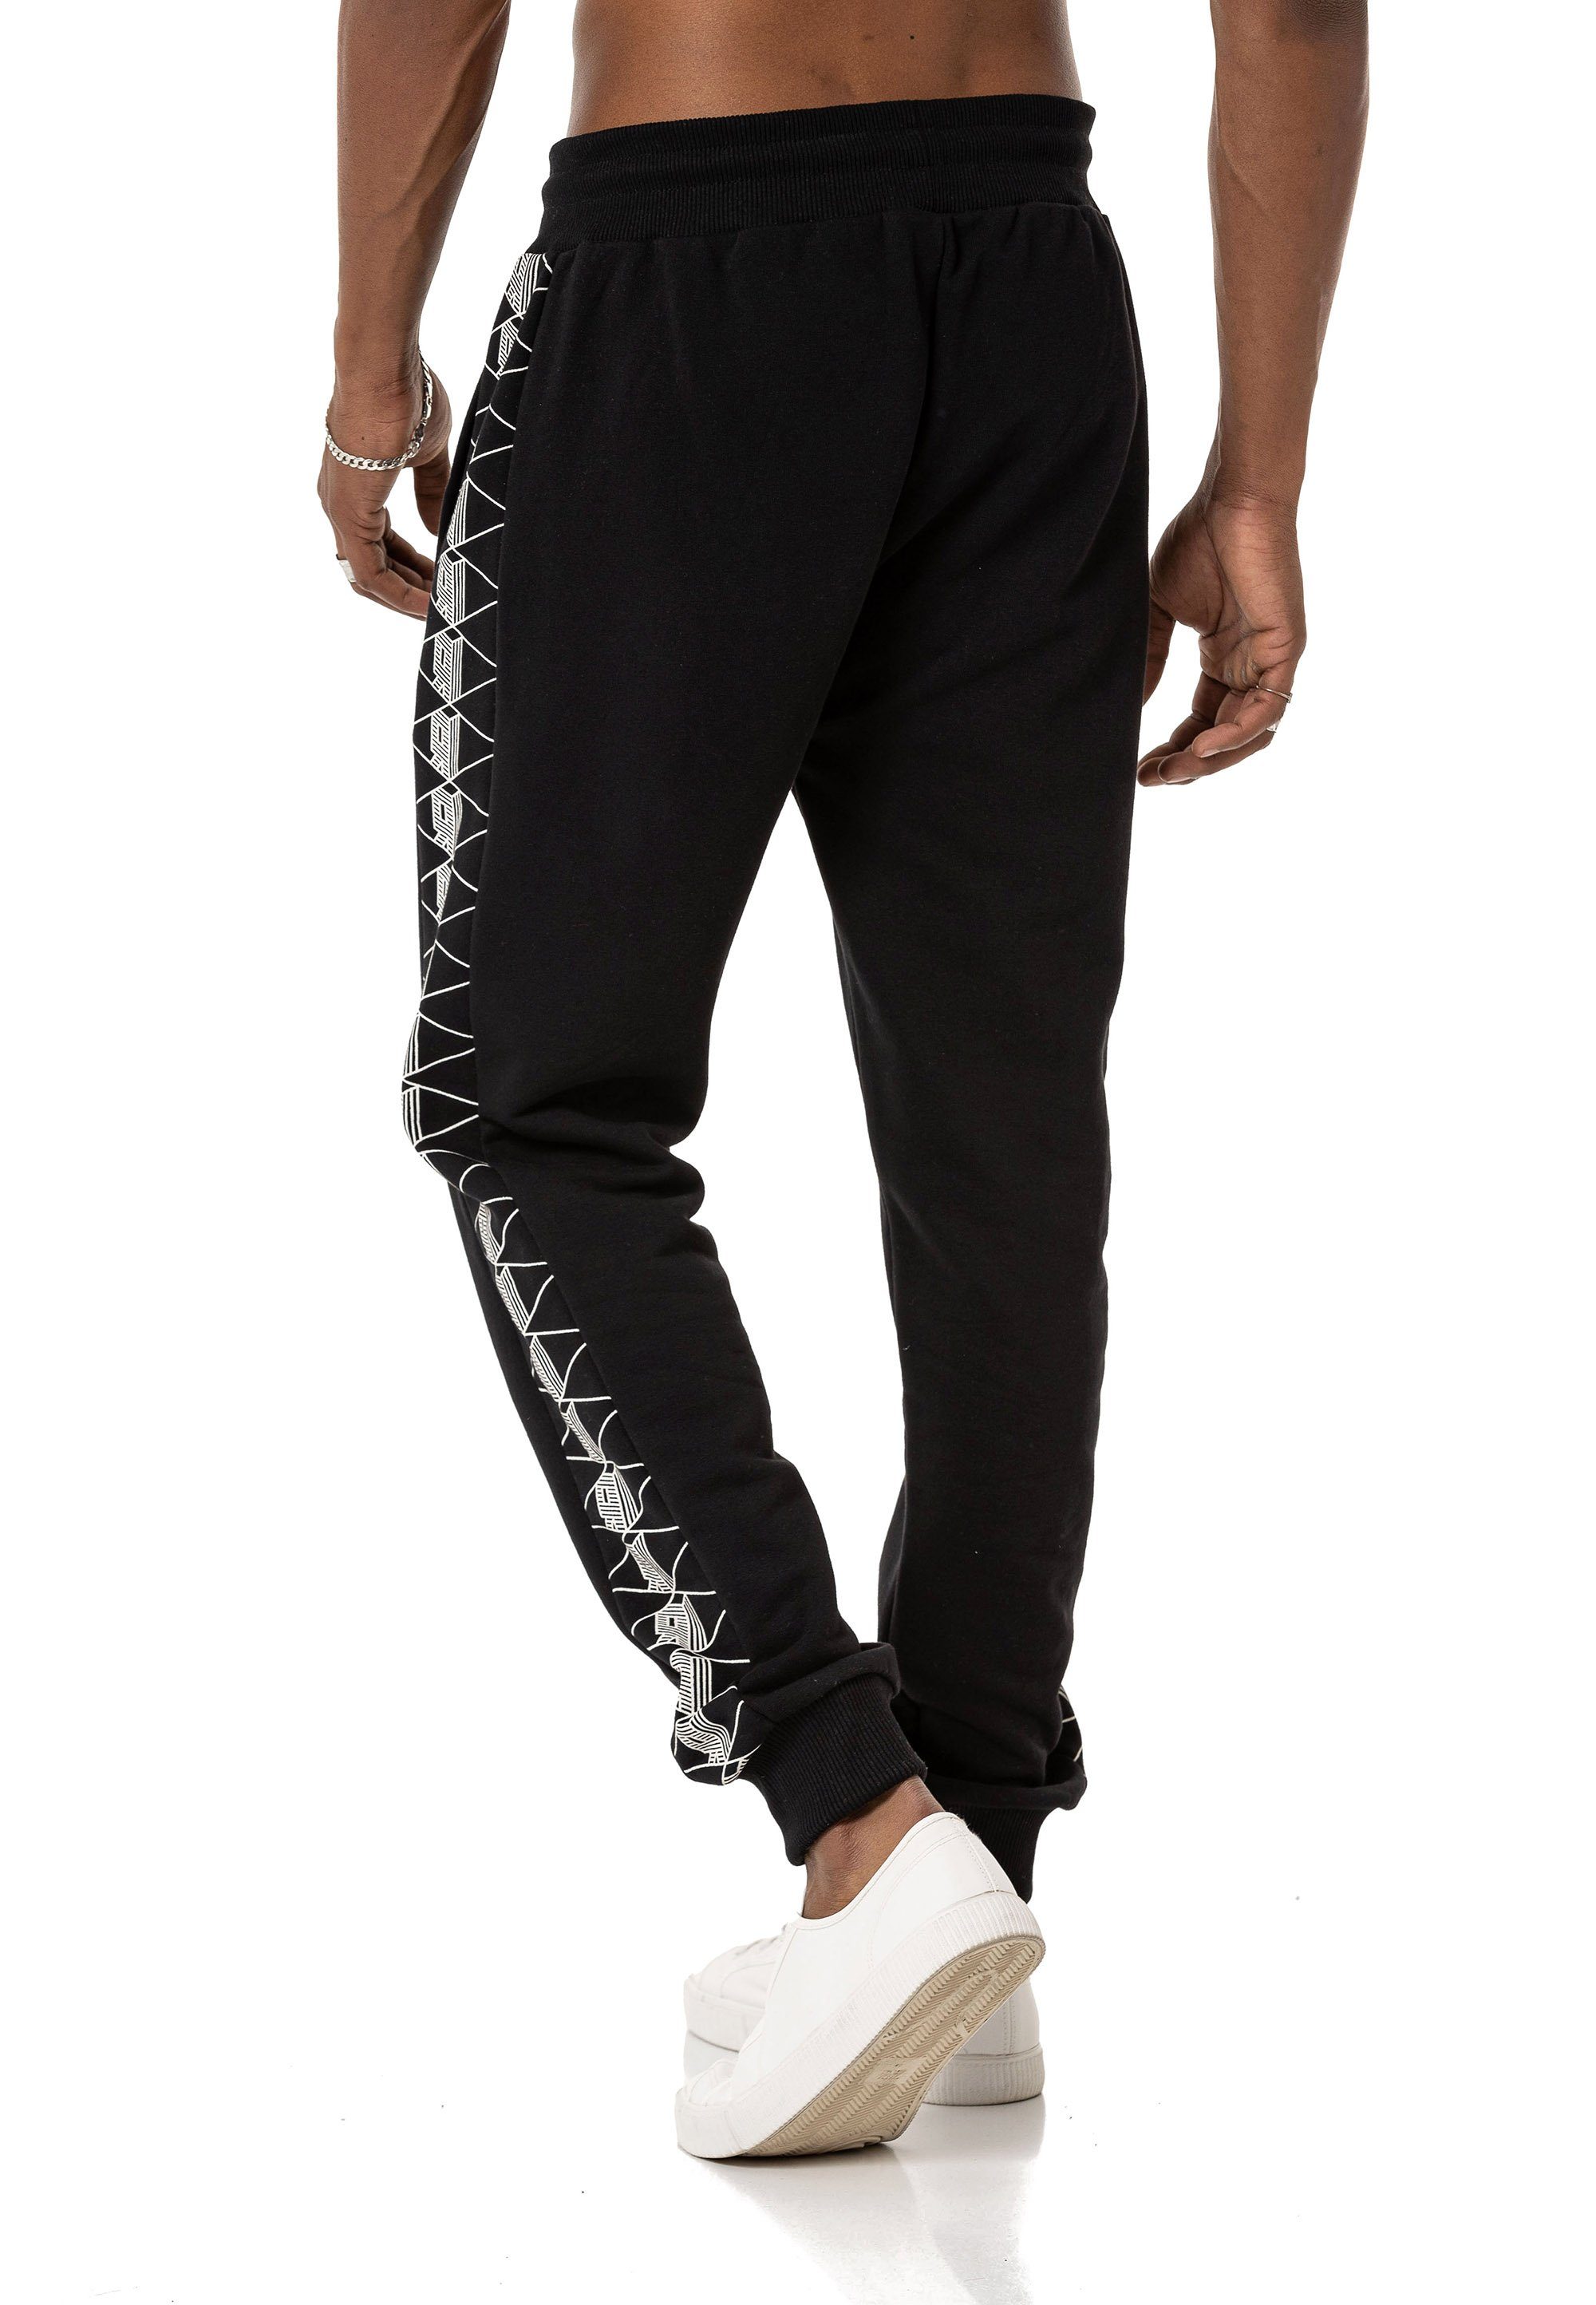 RedBridge Jogginghose Sweatpants Schwarz Print Qualität Premium mit 3D seitlichem